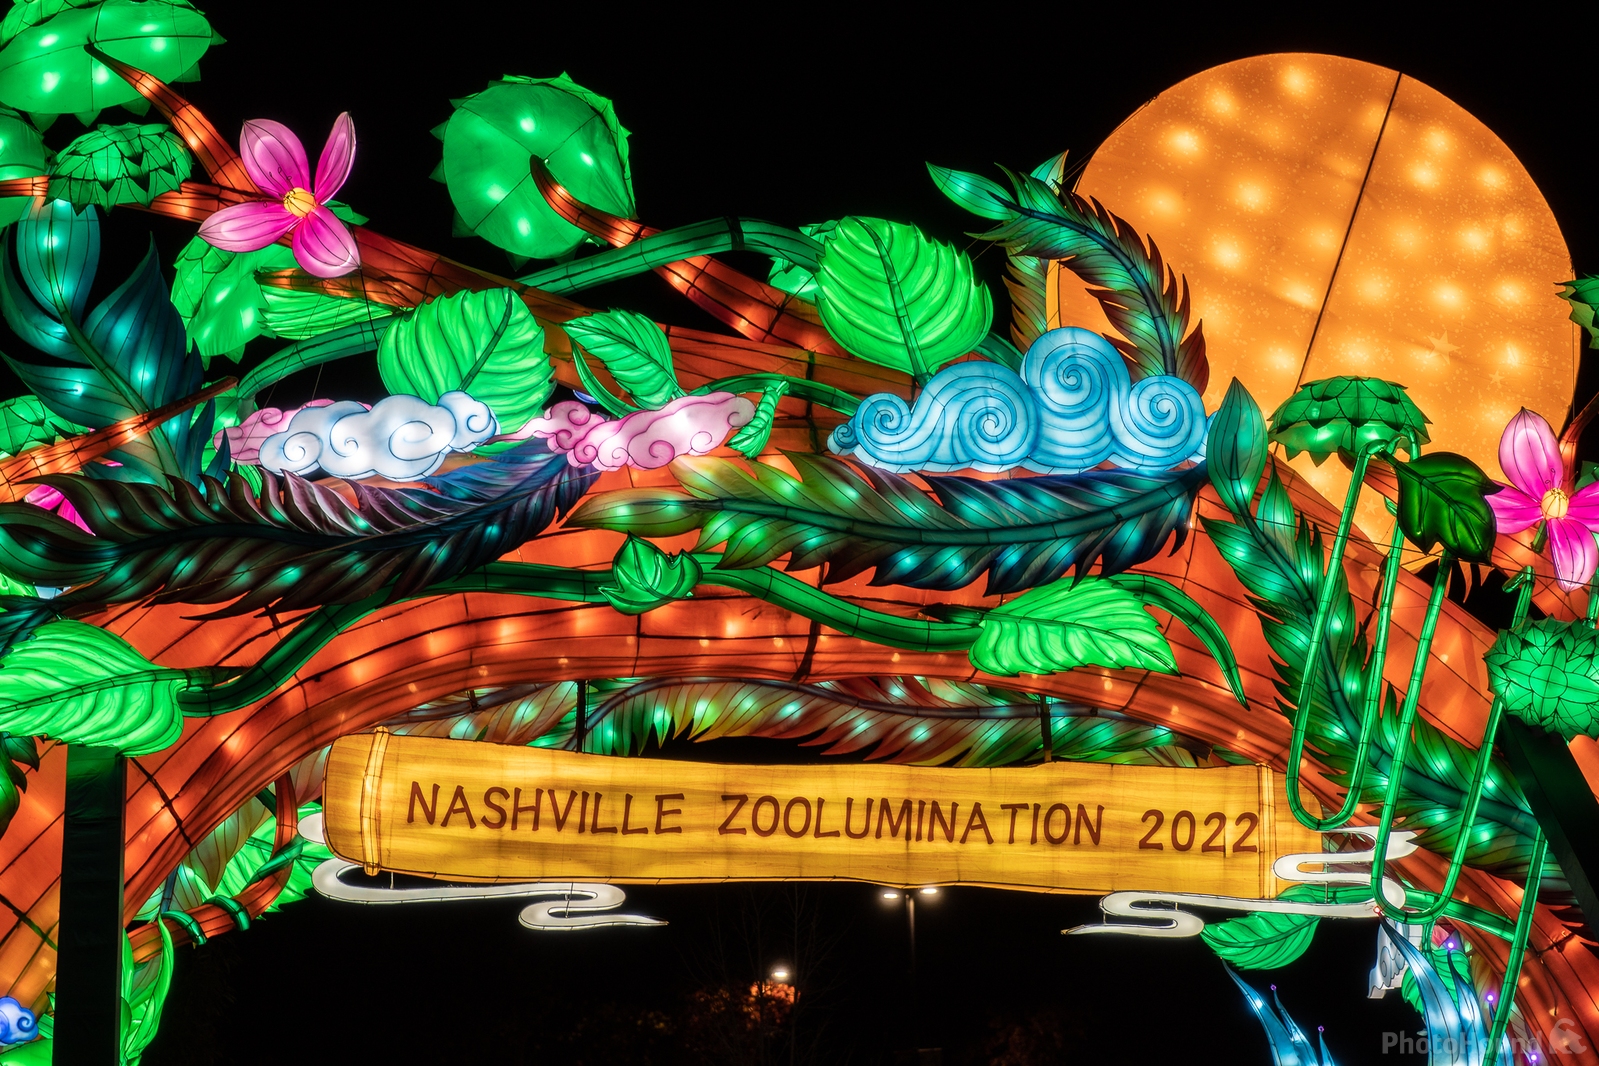 Image of Zoolumination at Nashville Zoo by James Billings.